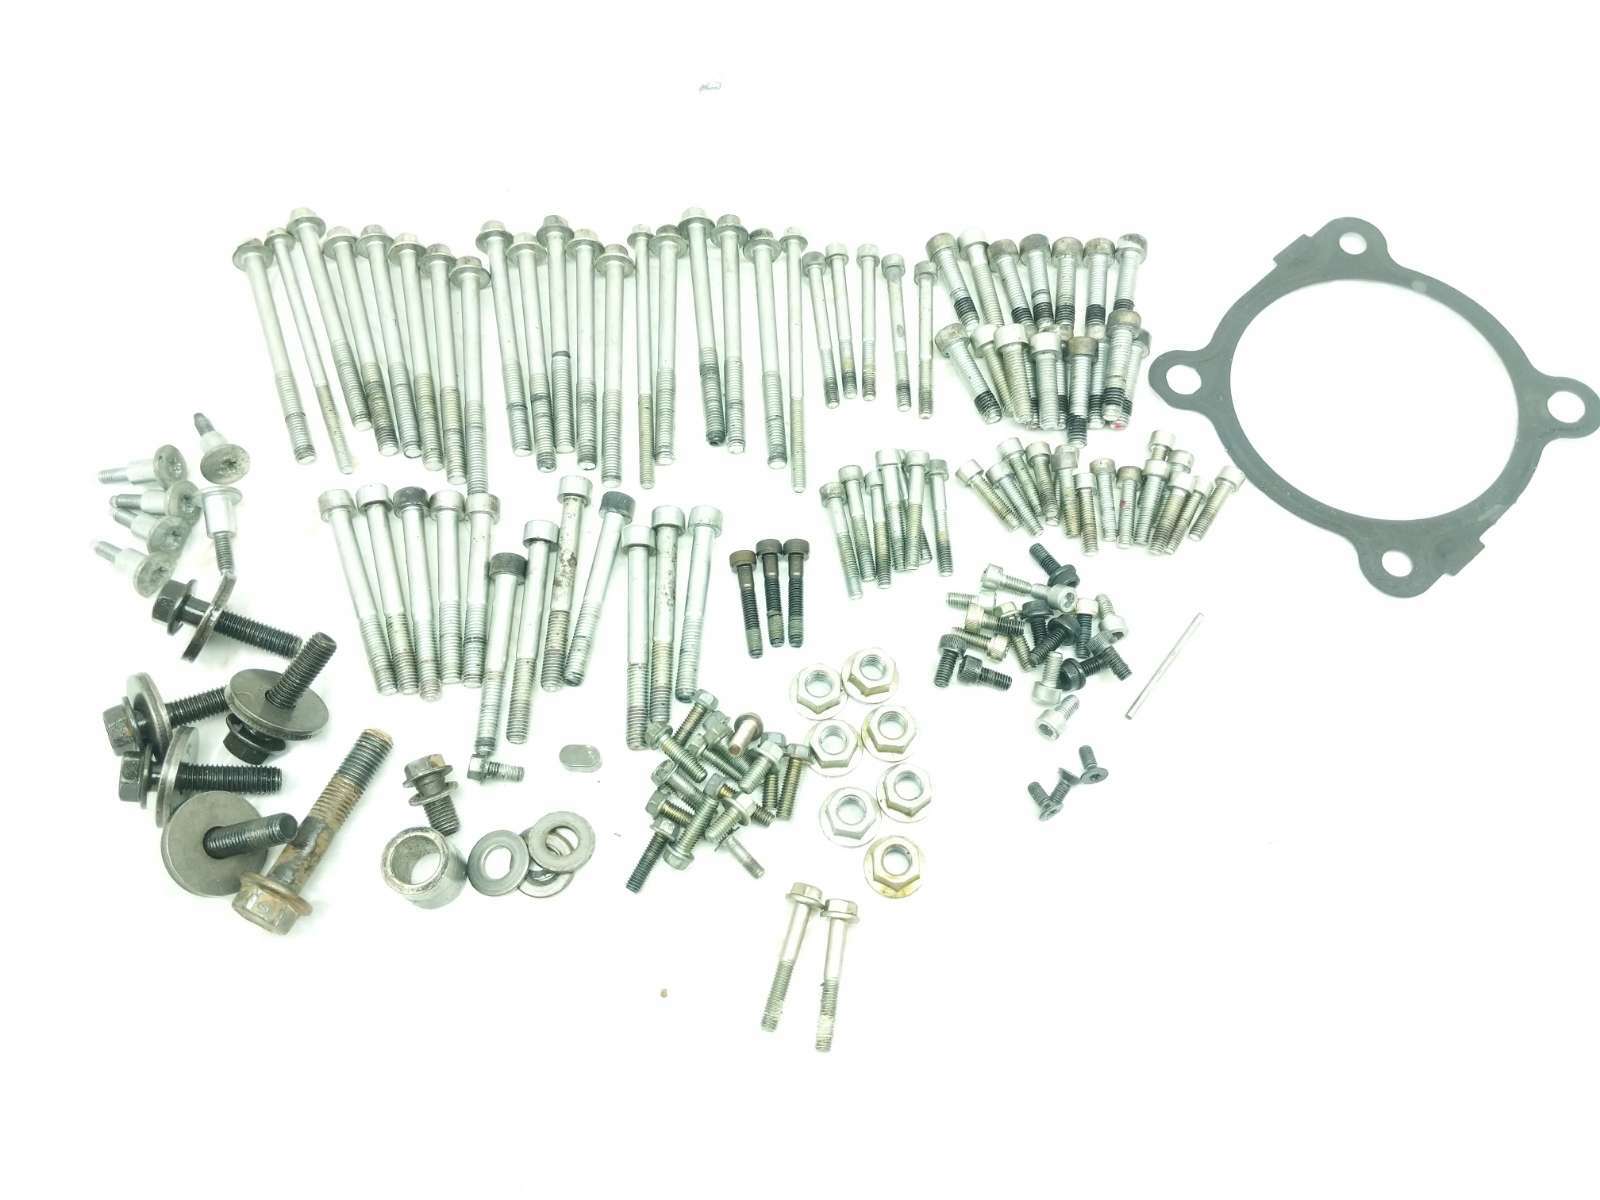 17 Indian Chieftain Dark Horse Engine Motor Miscellaneous Parts Master Hardware Bolt Kit